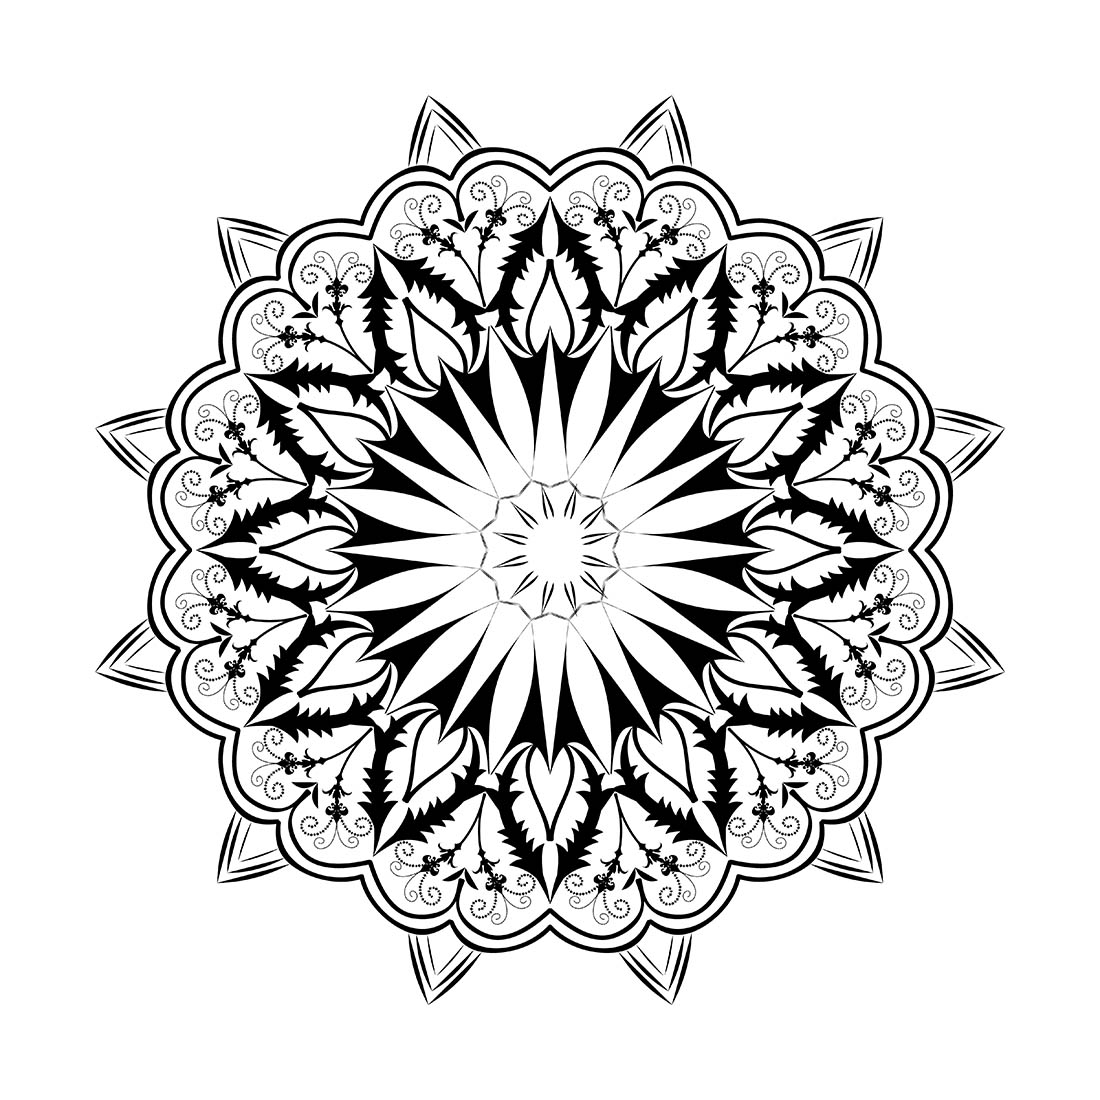 , pencil sketch drawing beautiful creative mandala art, modern mandala design, gradient mandala, black and white mandala design cover image.